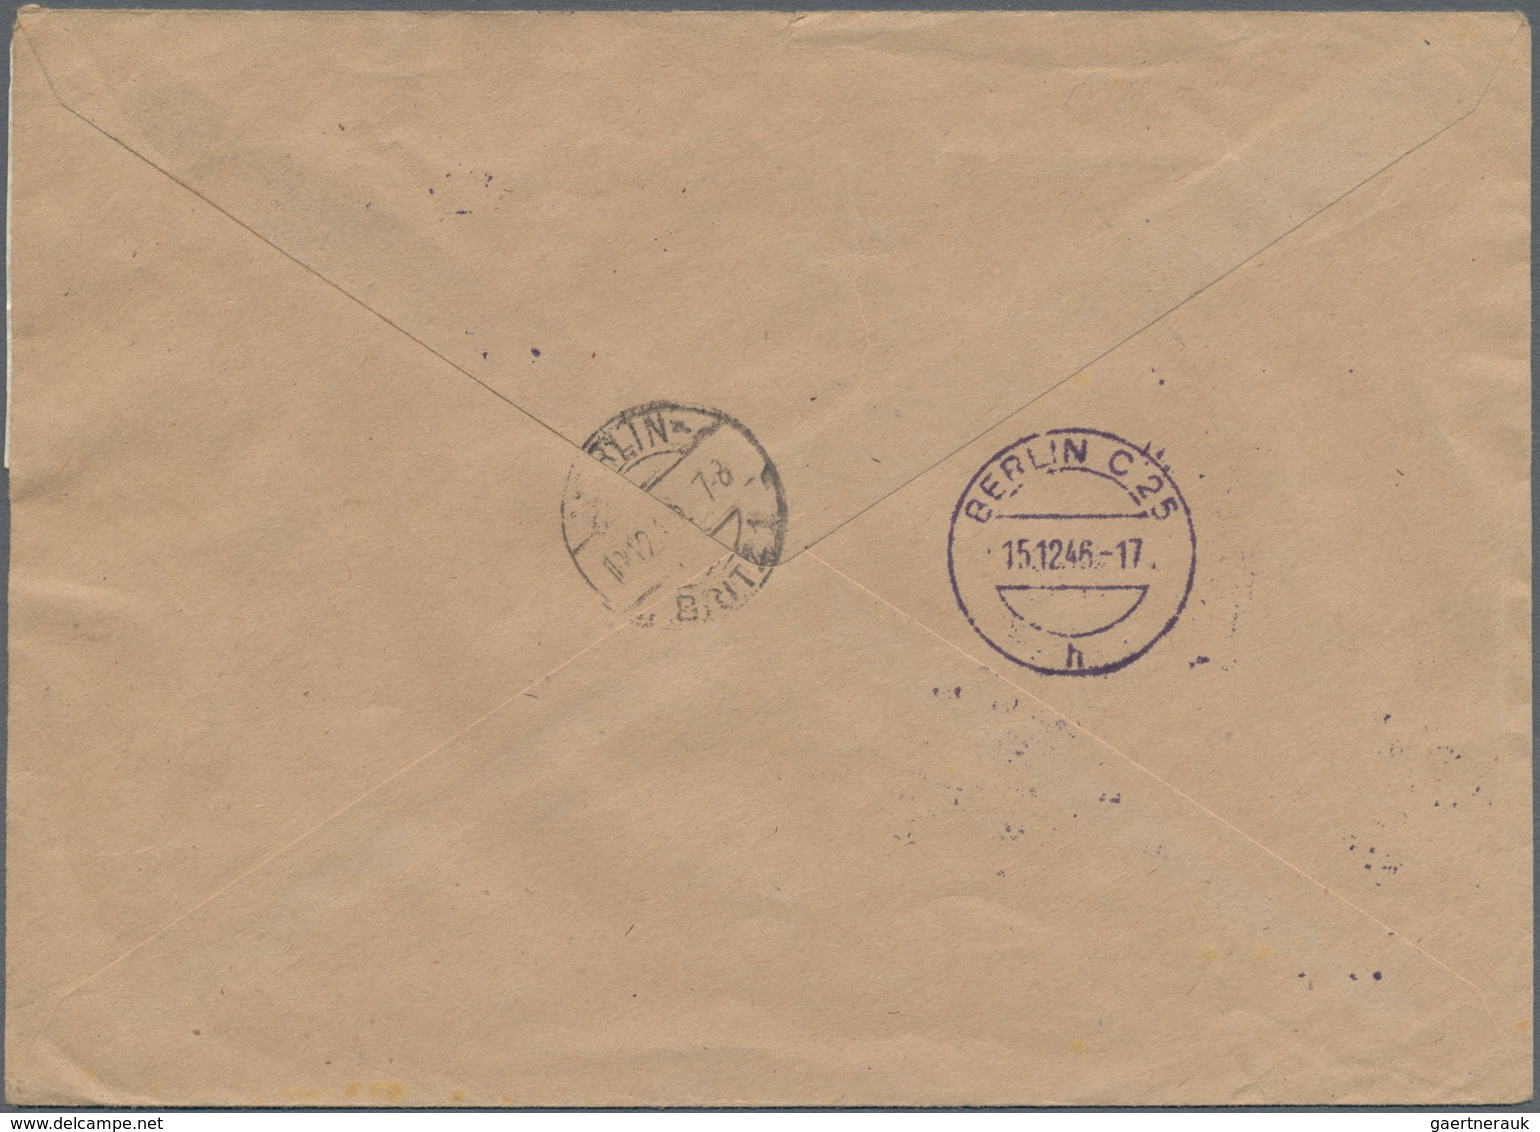 Alliierte Besetzung - Gemeinschaftsausgaben: 1946 (8.-15.12.), Briefmarkenausstellung Berlin-Zeughau - Other & Unclassified